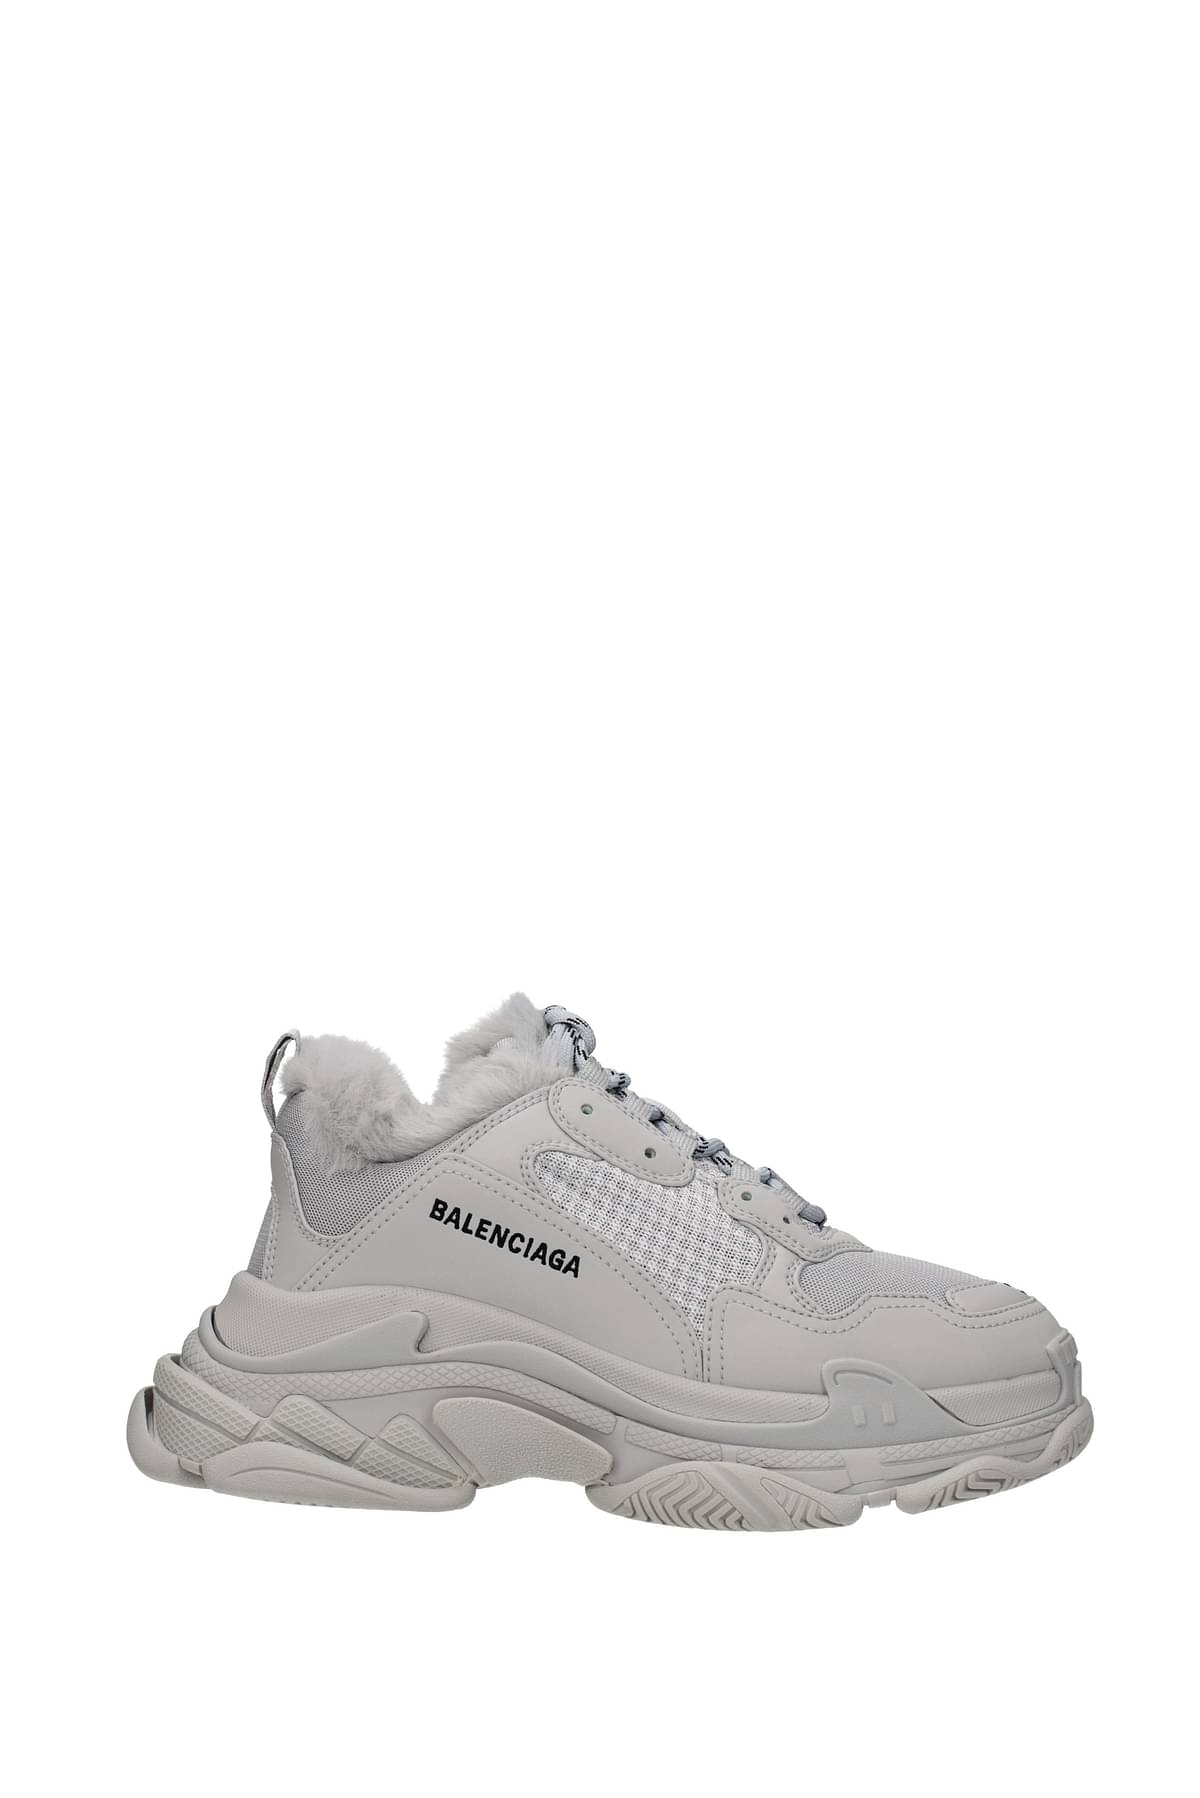 Balenciaga Men's Triple S Sneakers in White, Size UK 7 | End Clothing